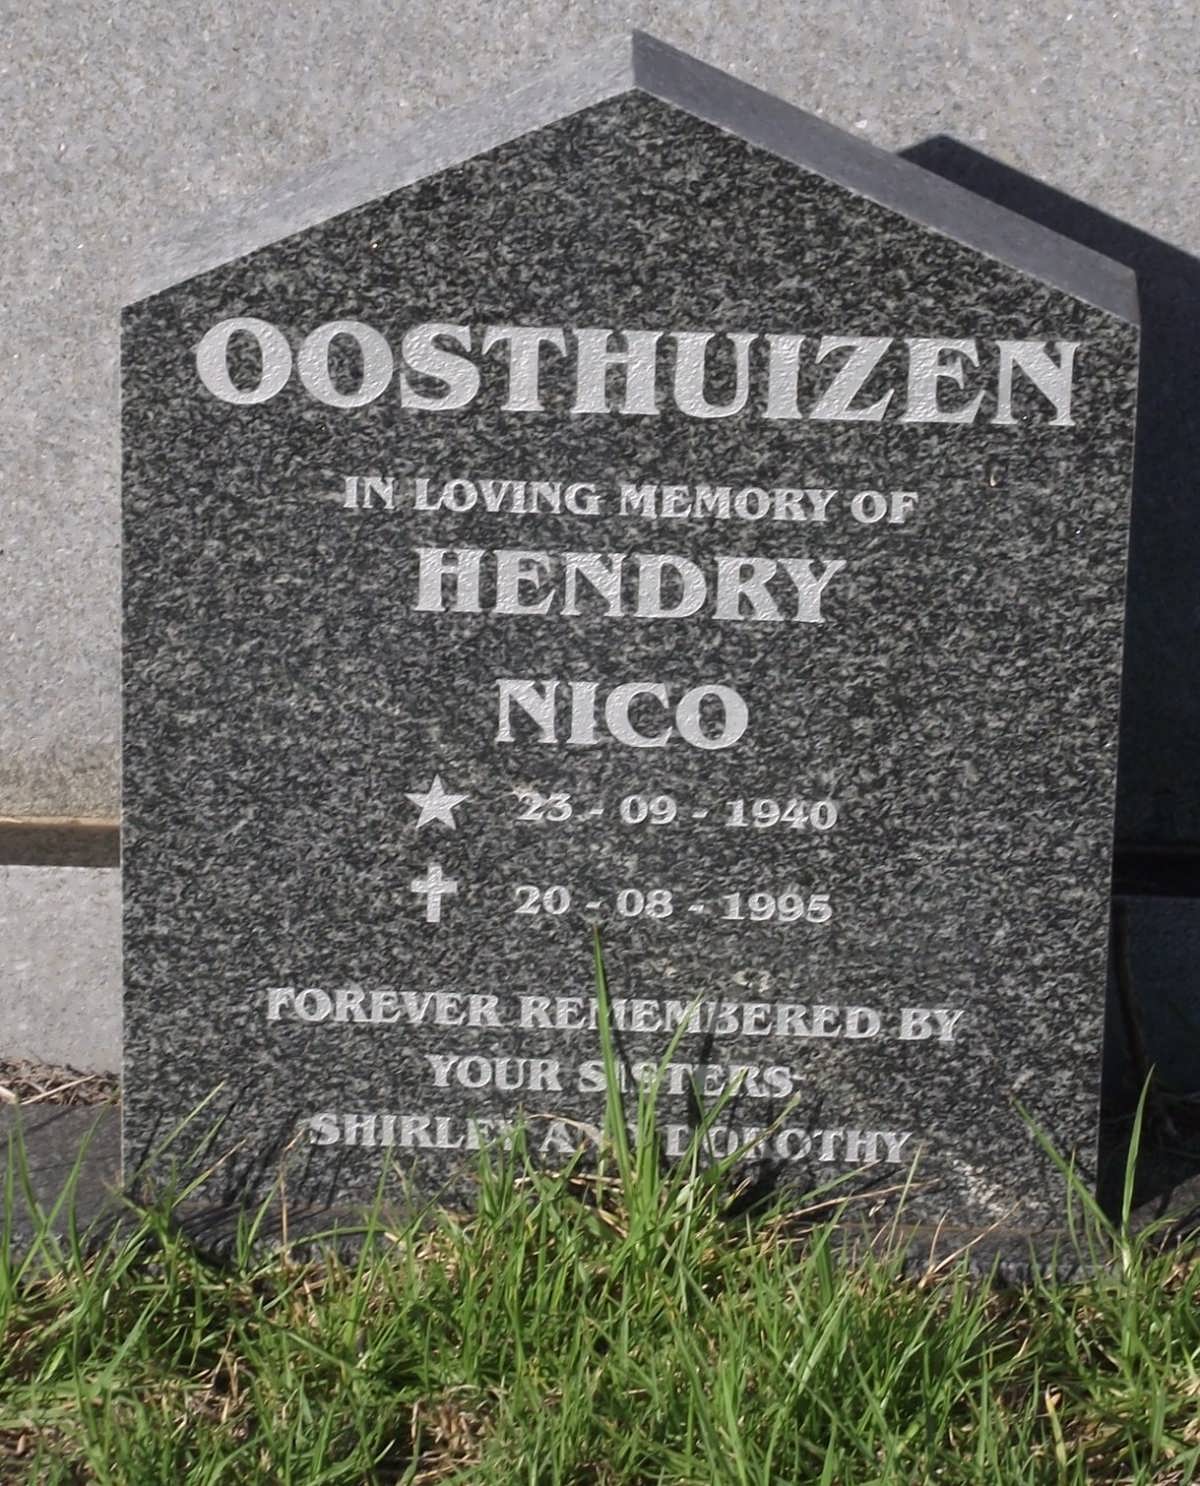 OOSTHUIZEN Hendry Nico 1940-1995